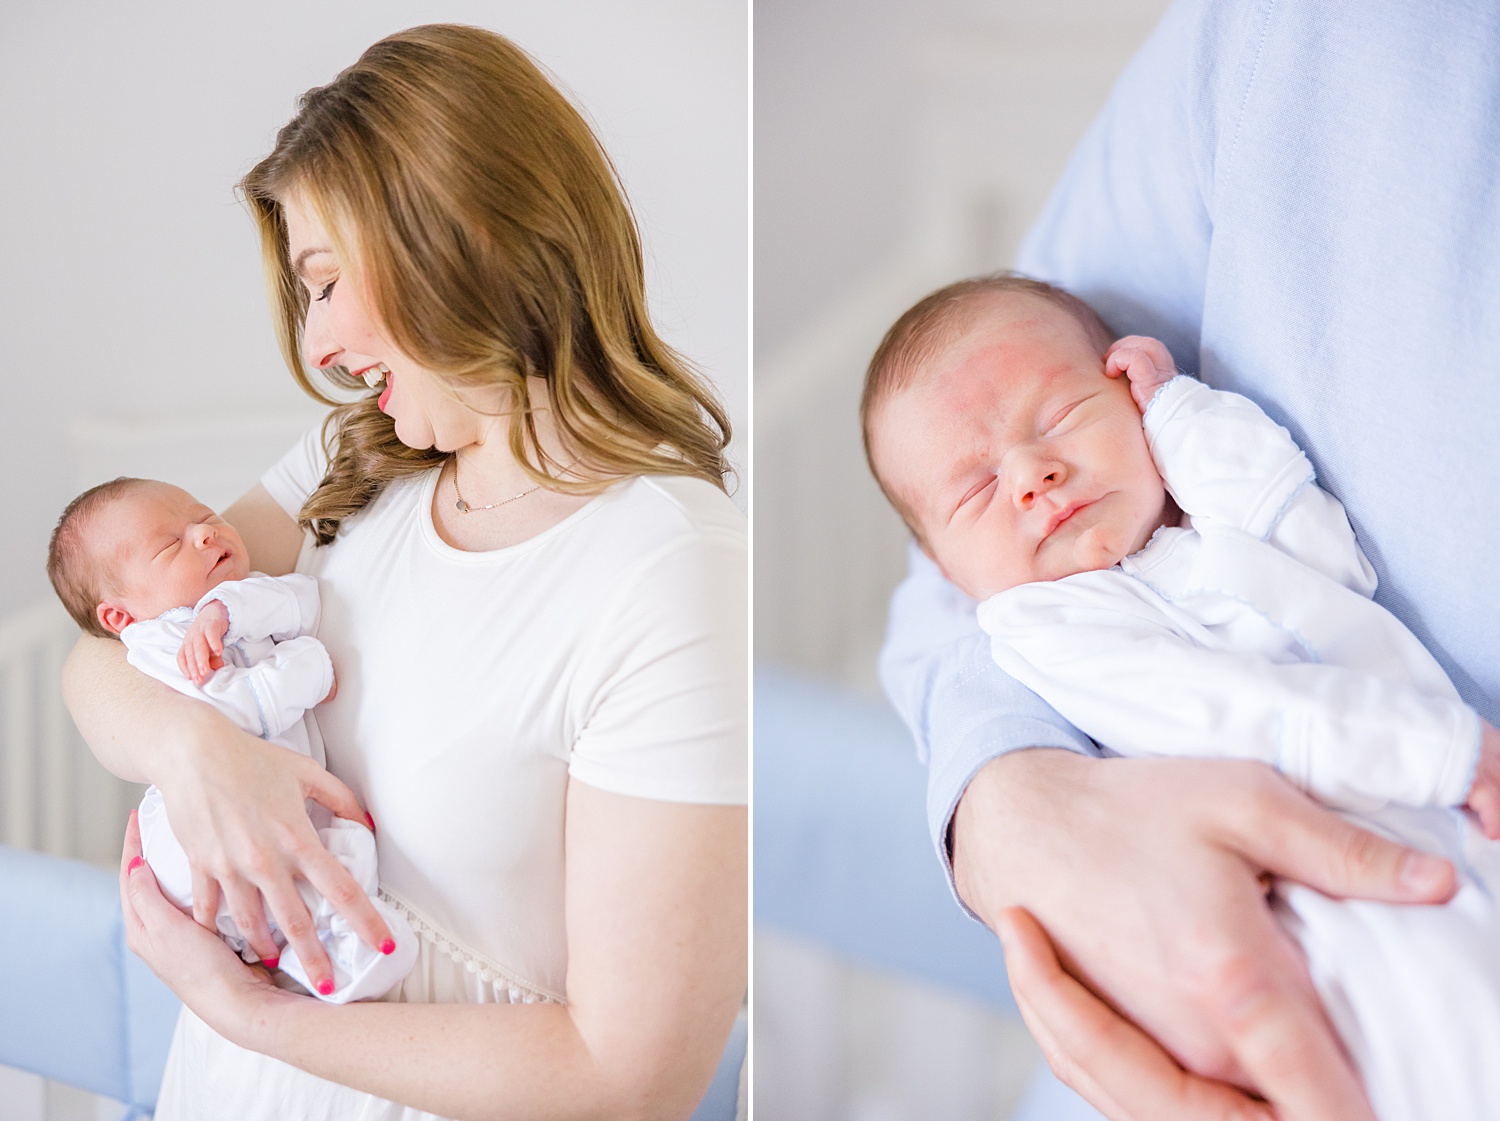 Birmingham In-Home Newborn photographer captures parents holding their son